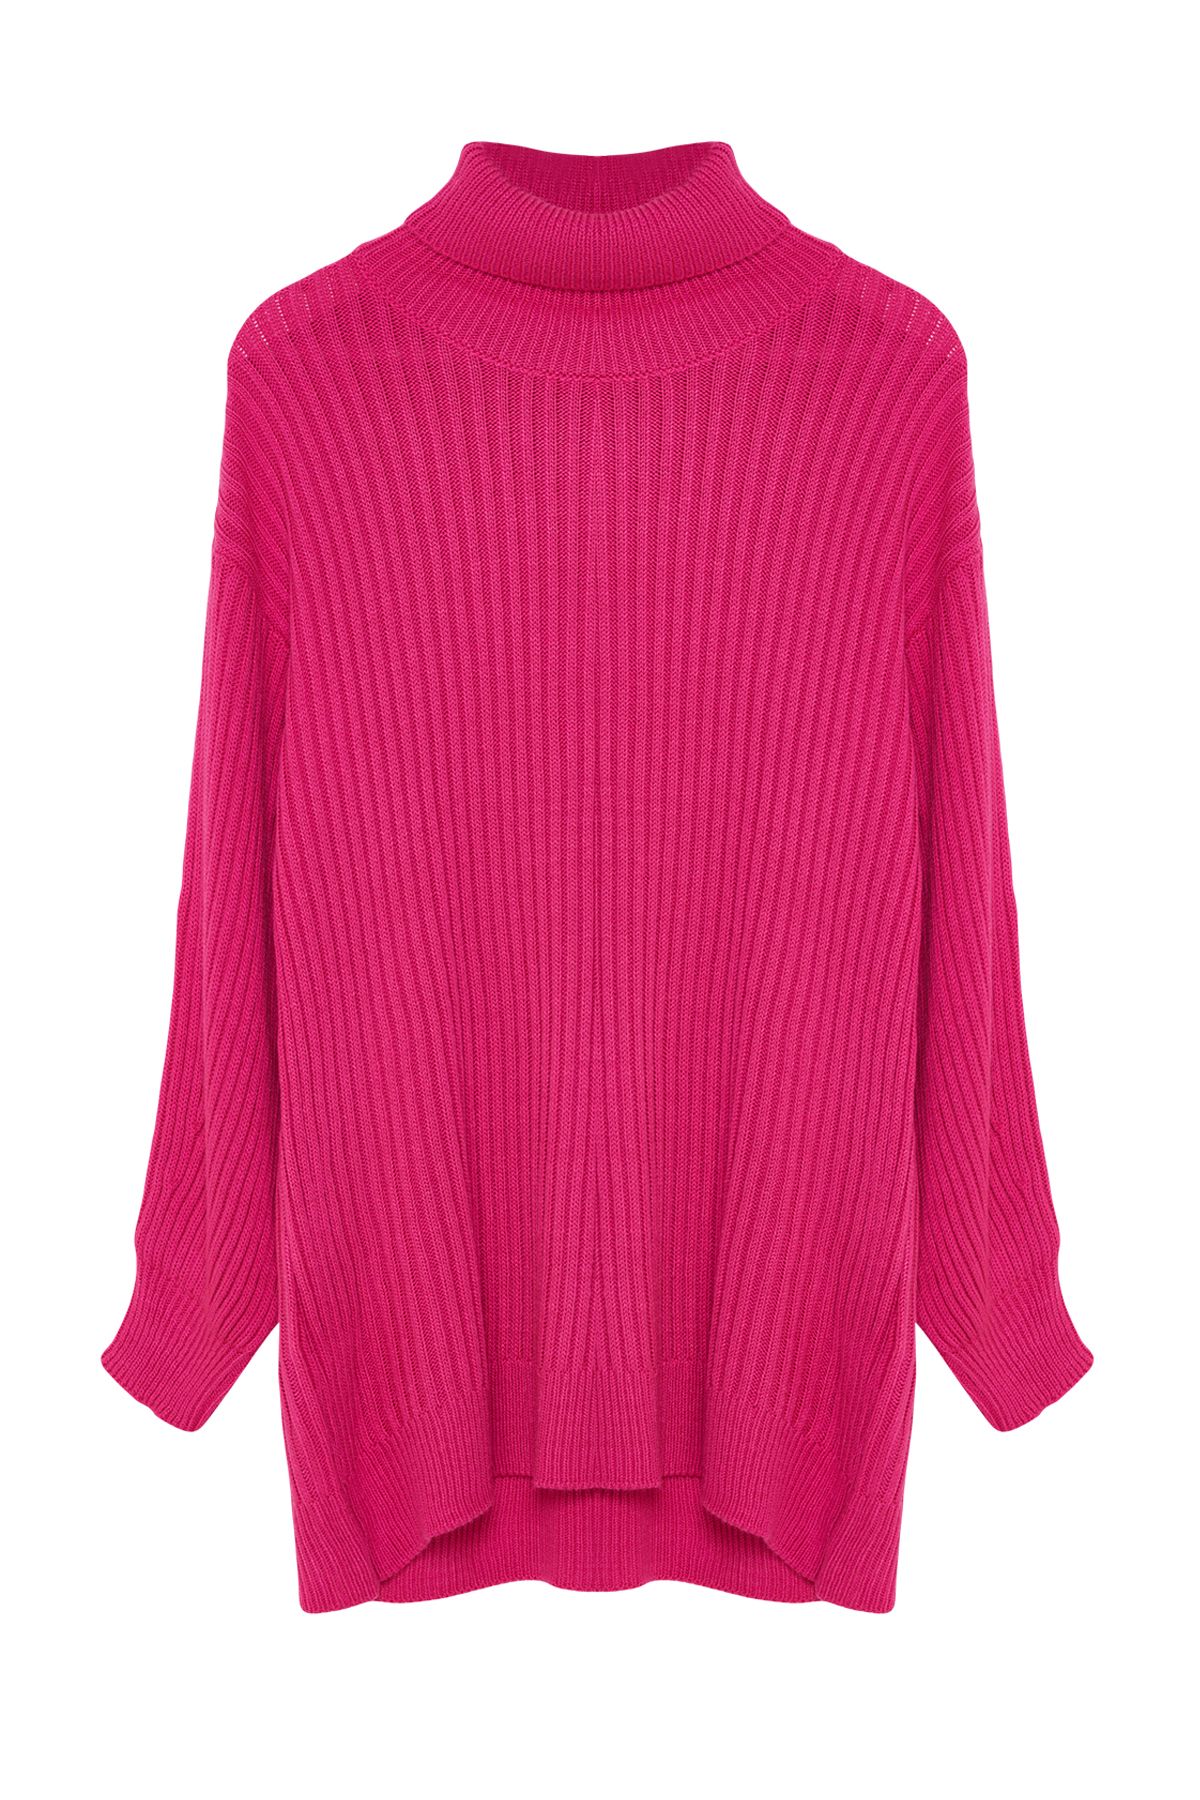 Trendyol Pink Ribbed Basic Knitwear Sweater